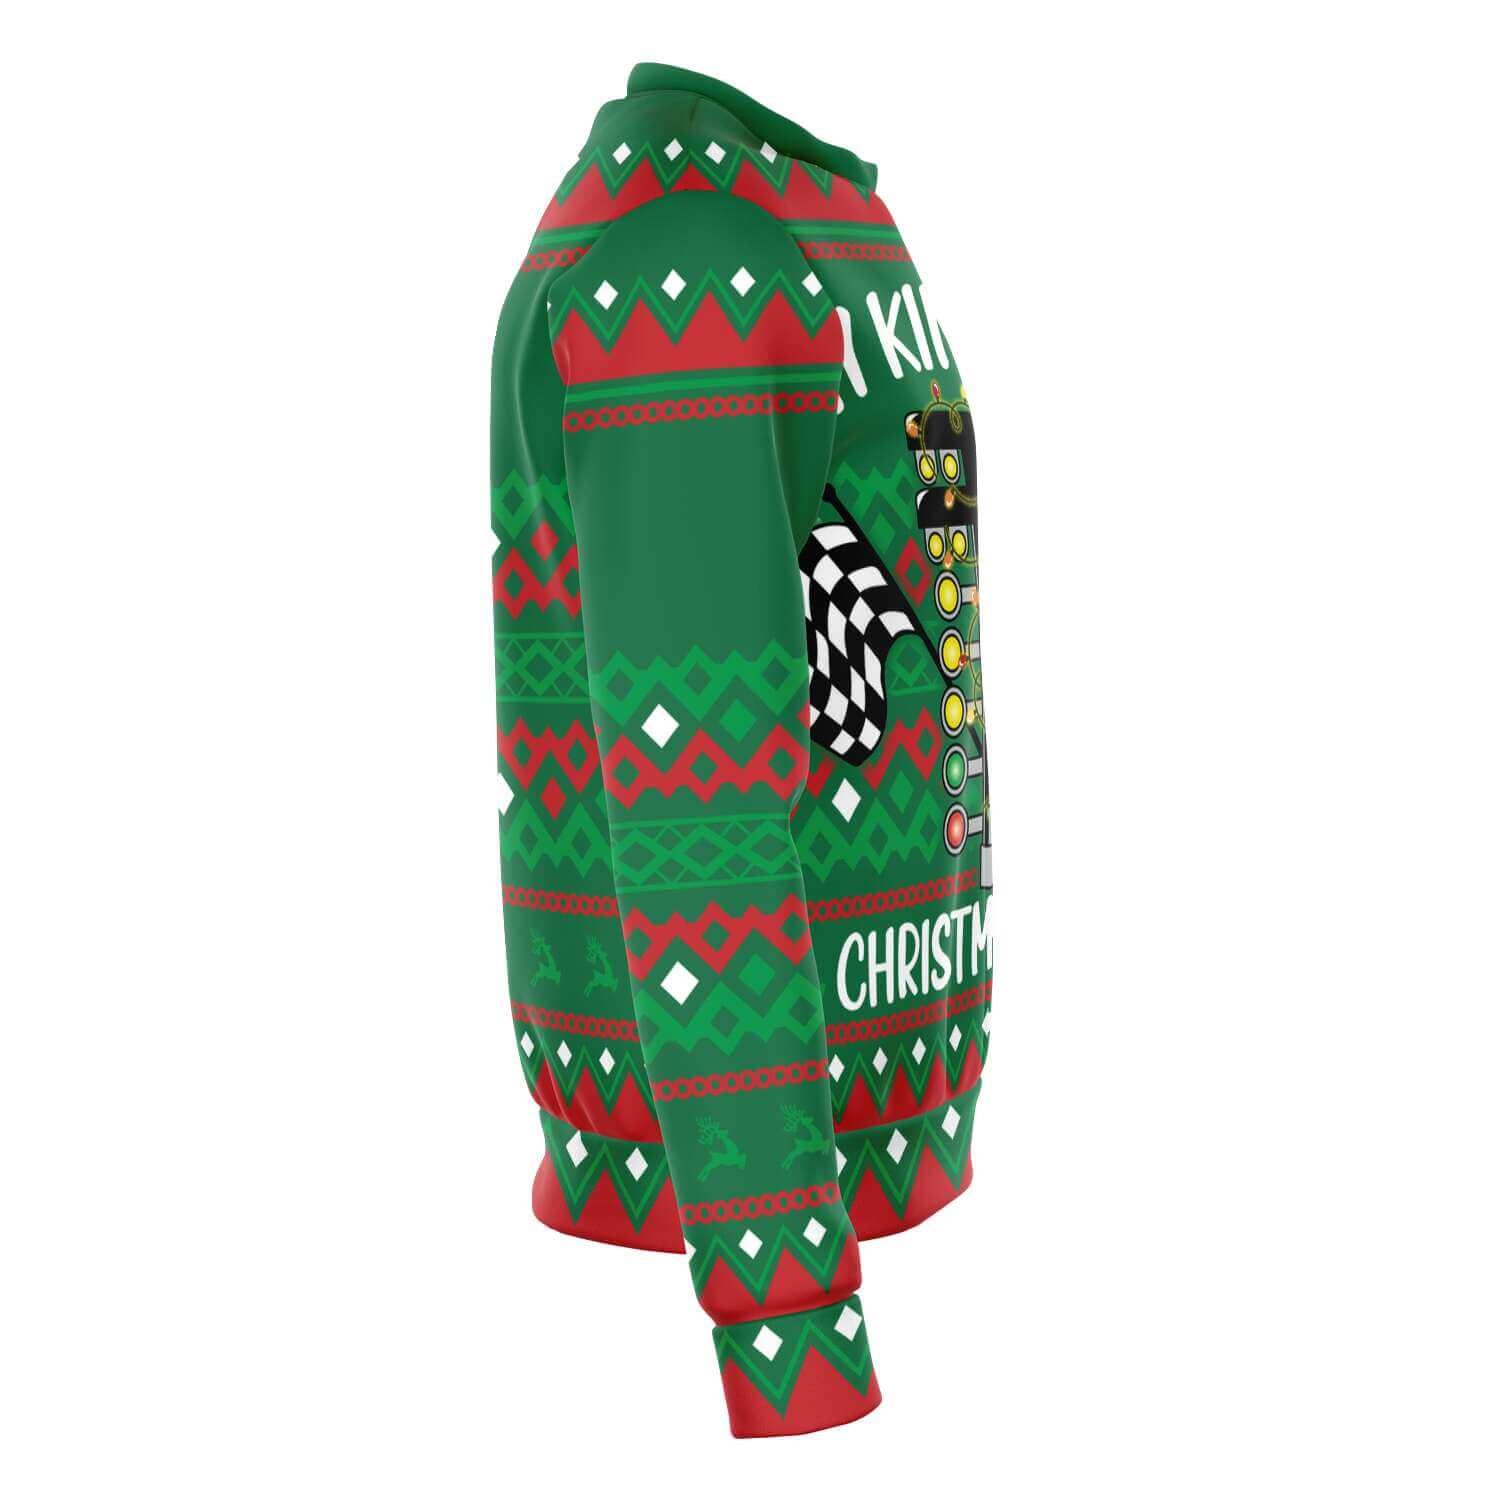 My-kind-of -Christmas-Tree-Athletic-Fashion-sweatshirt